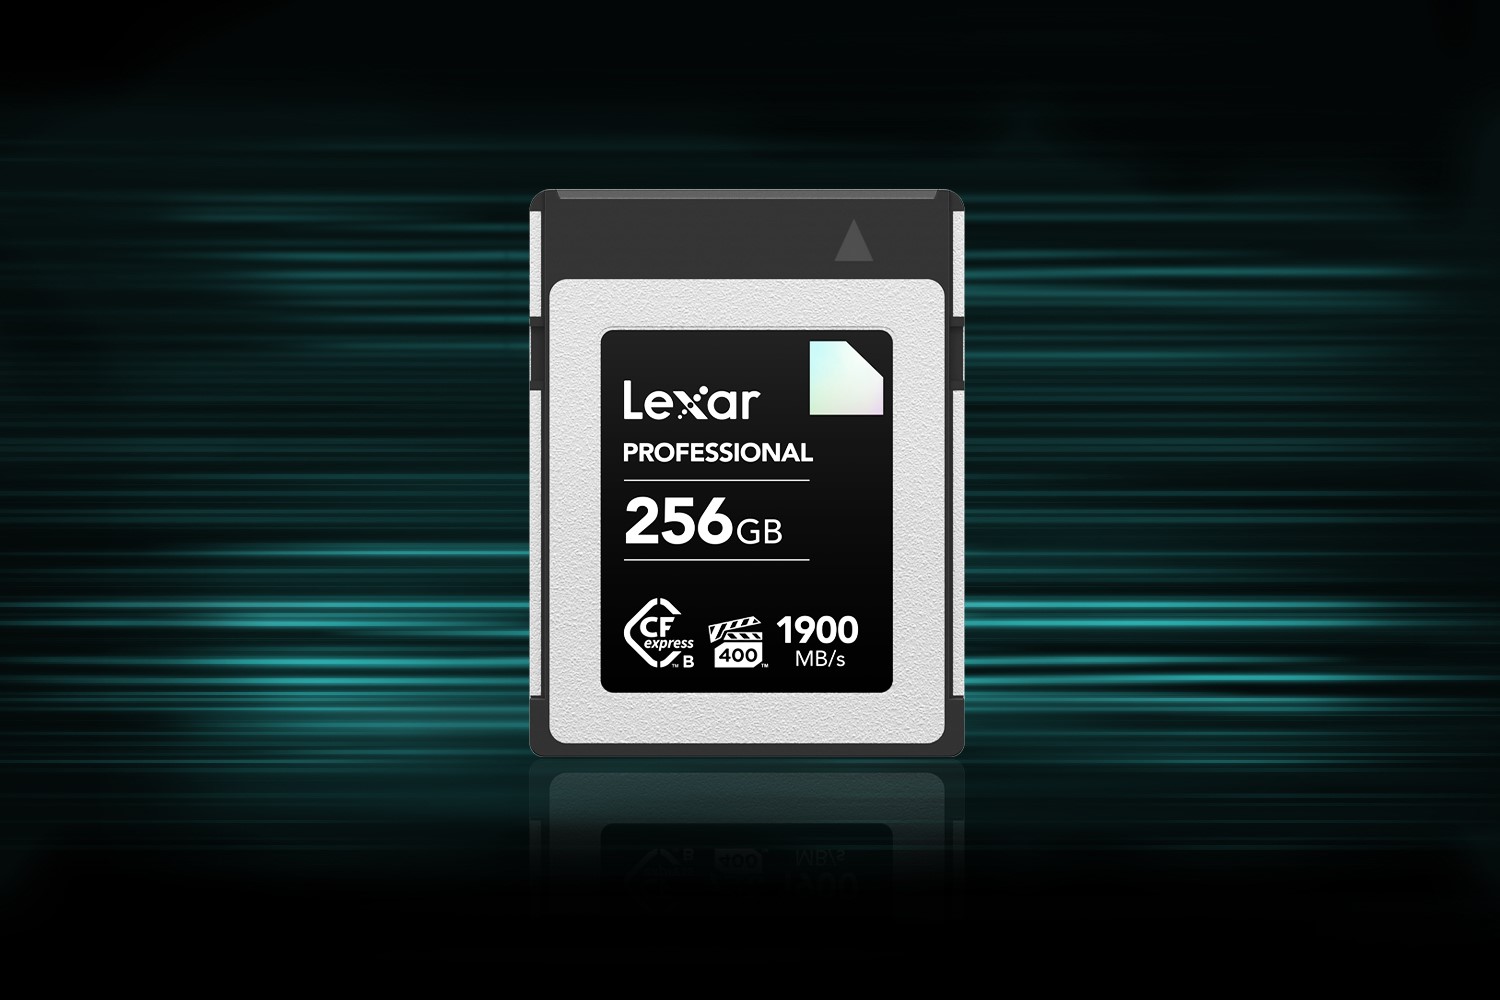 Lexar Professional 256GB memory card